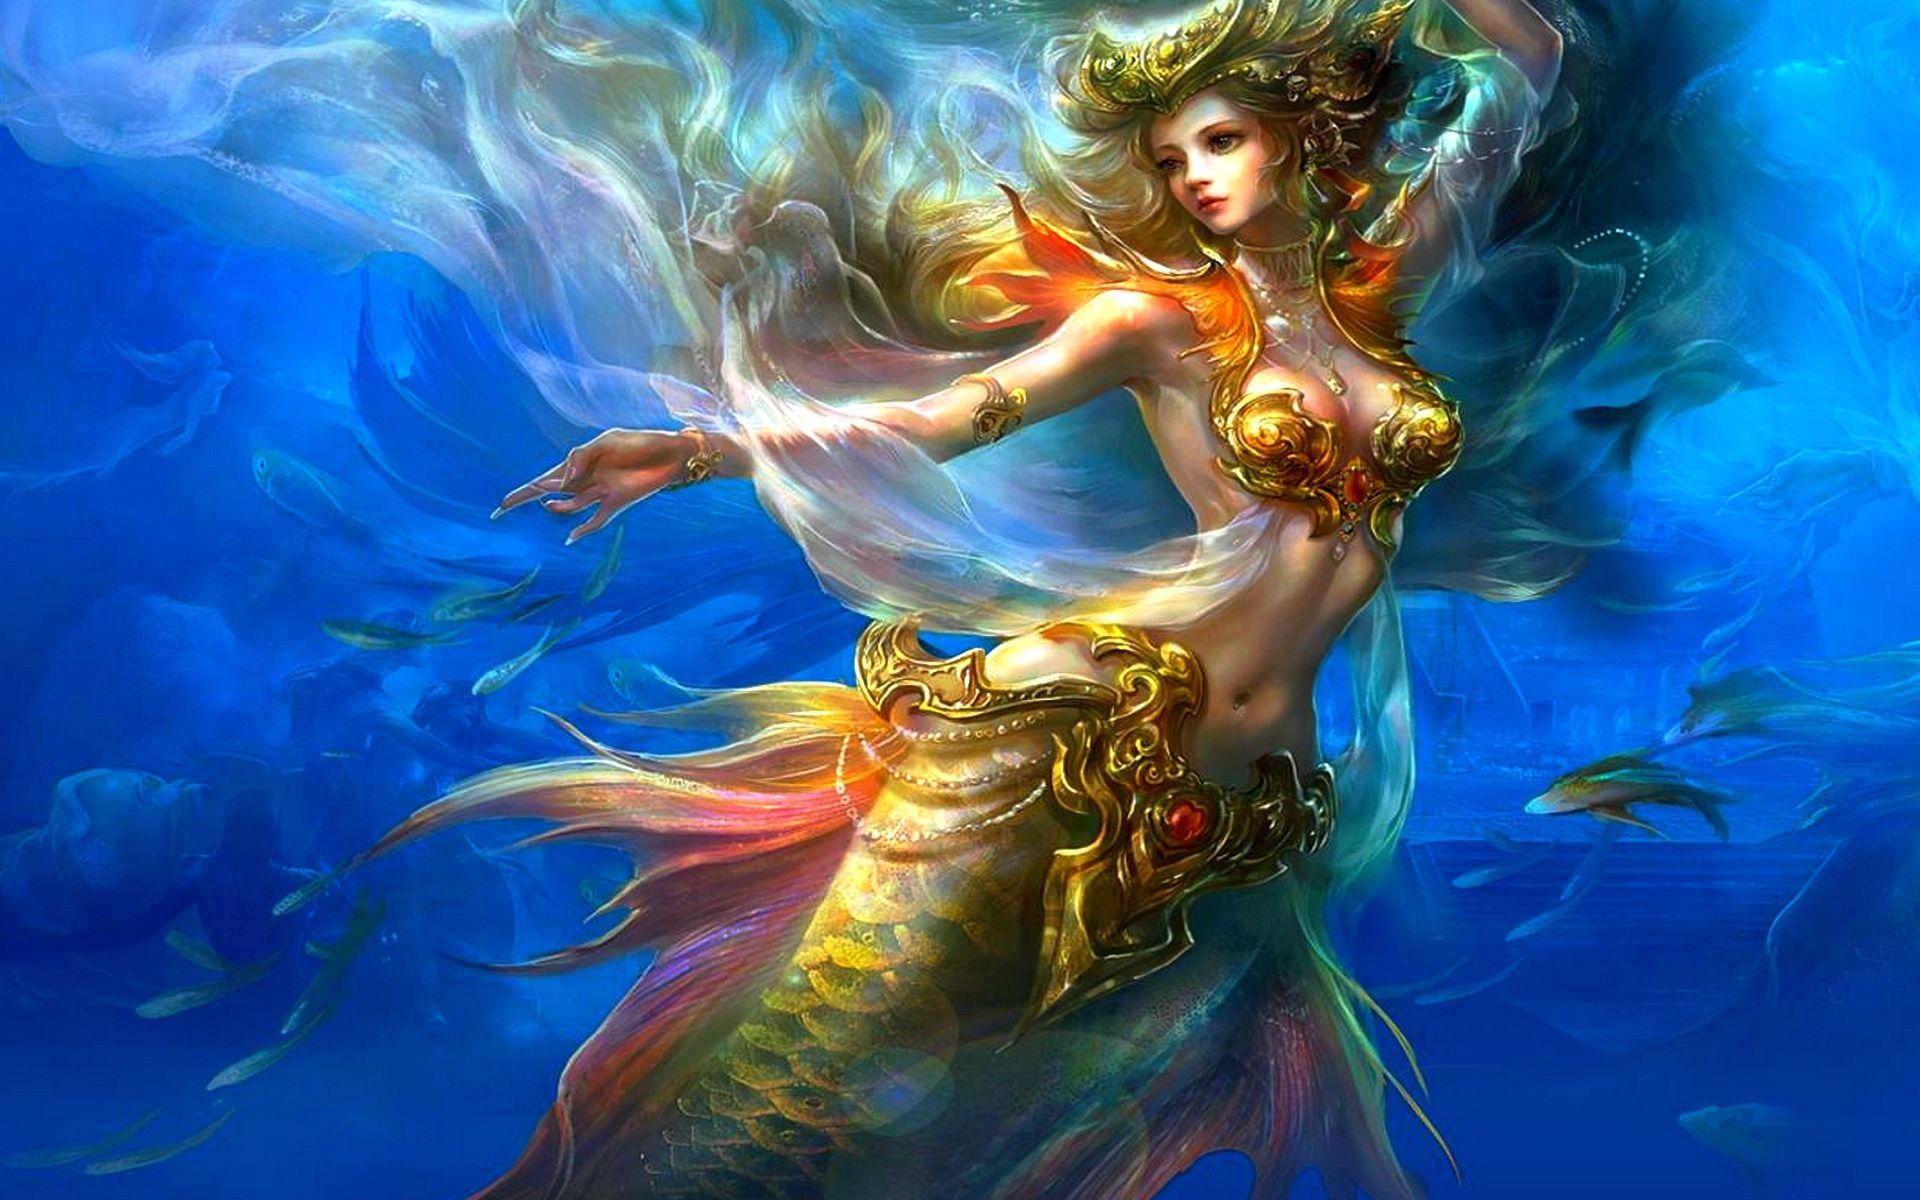 pic of mermaids. Download A Real Mermaid wallpaper 89245. Crafts